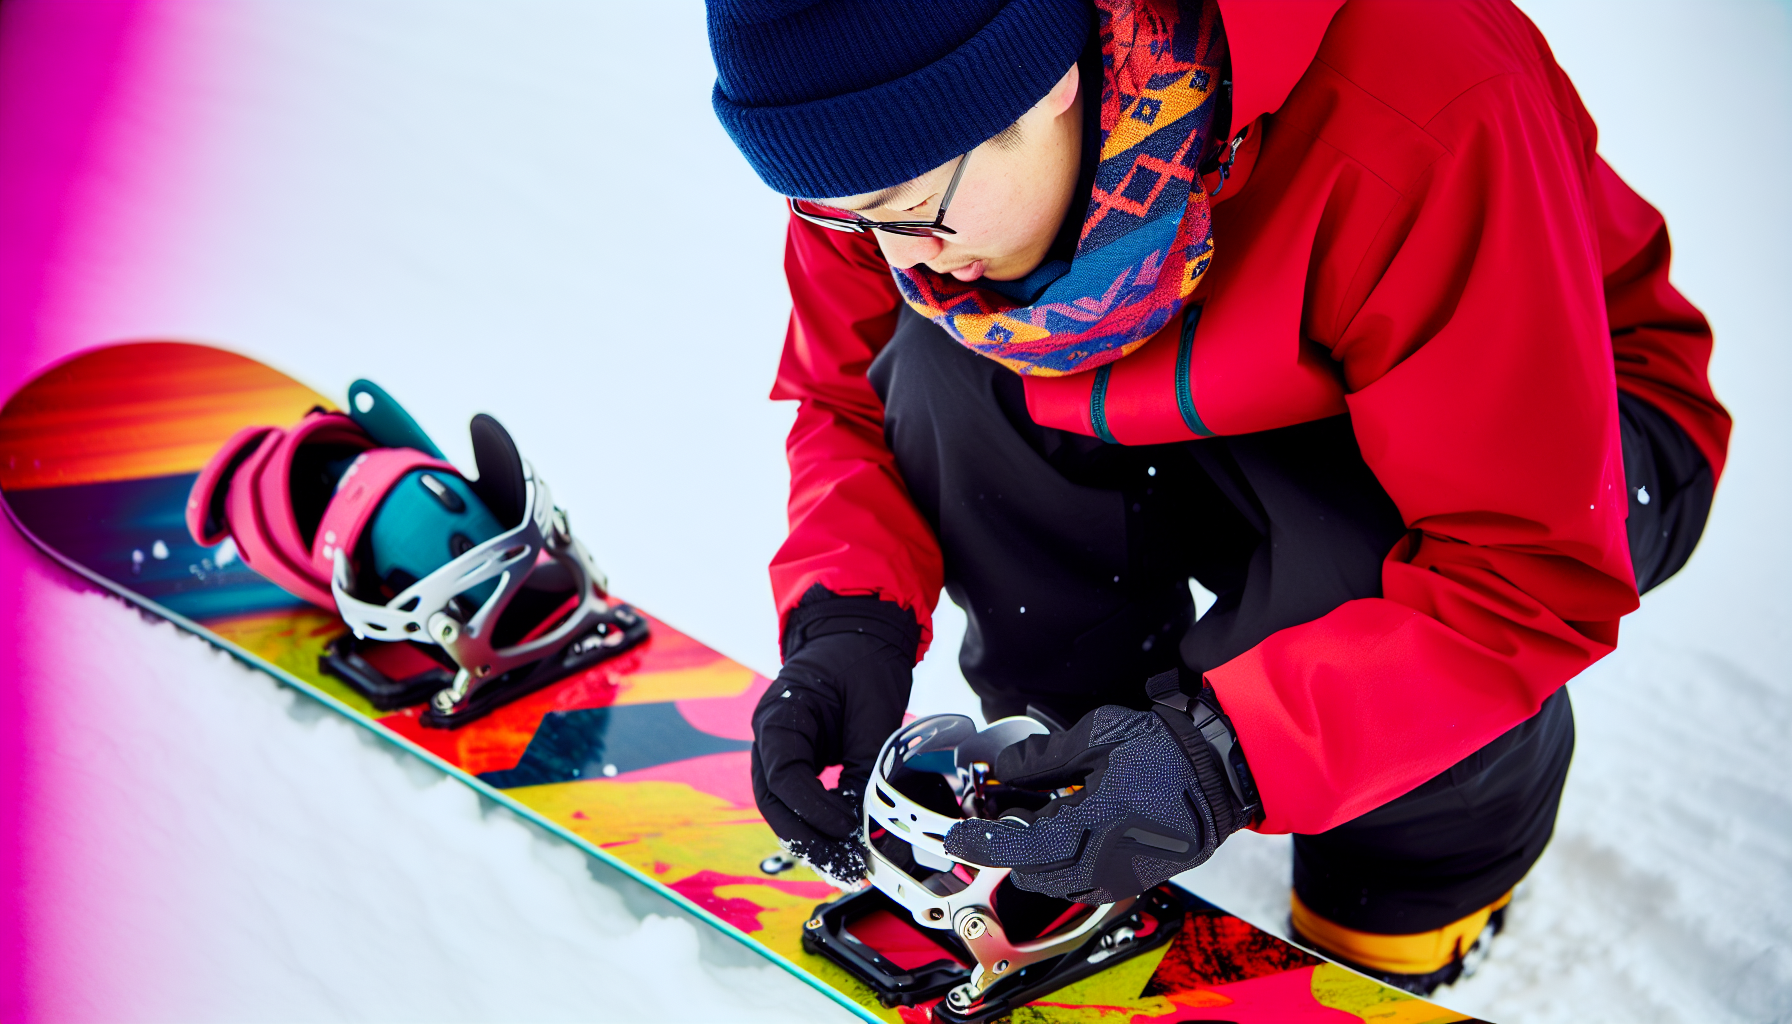 Snowboarder adjusting binding angles